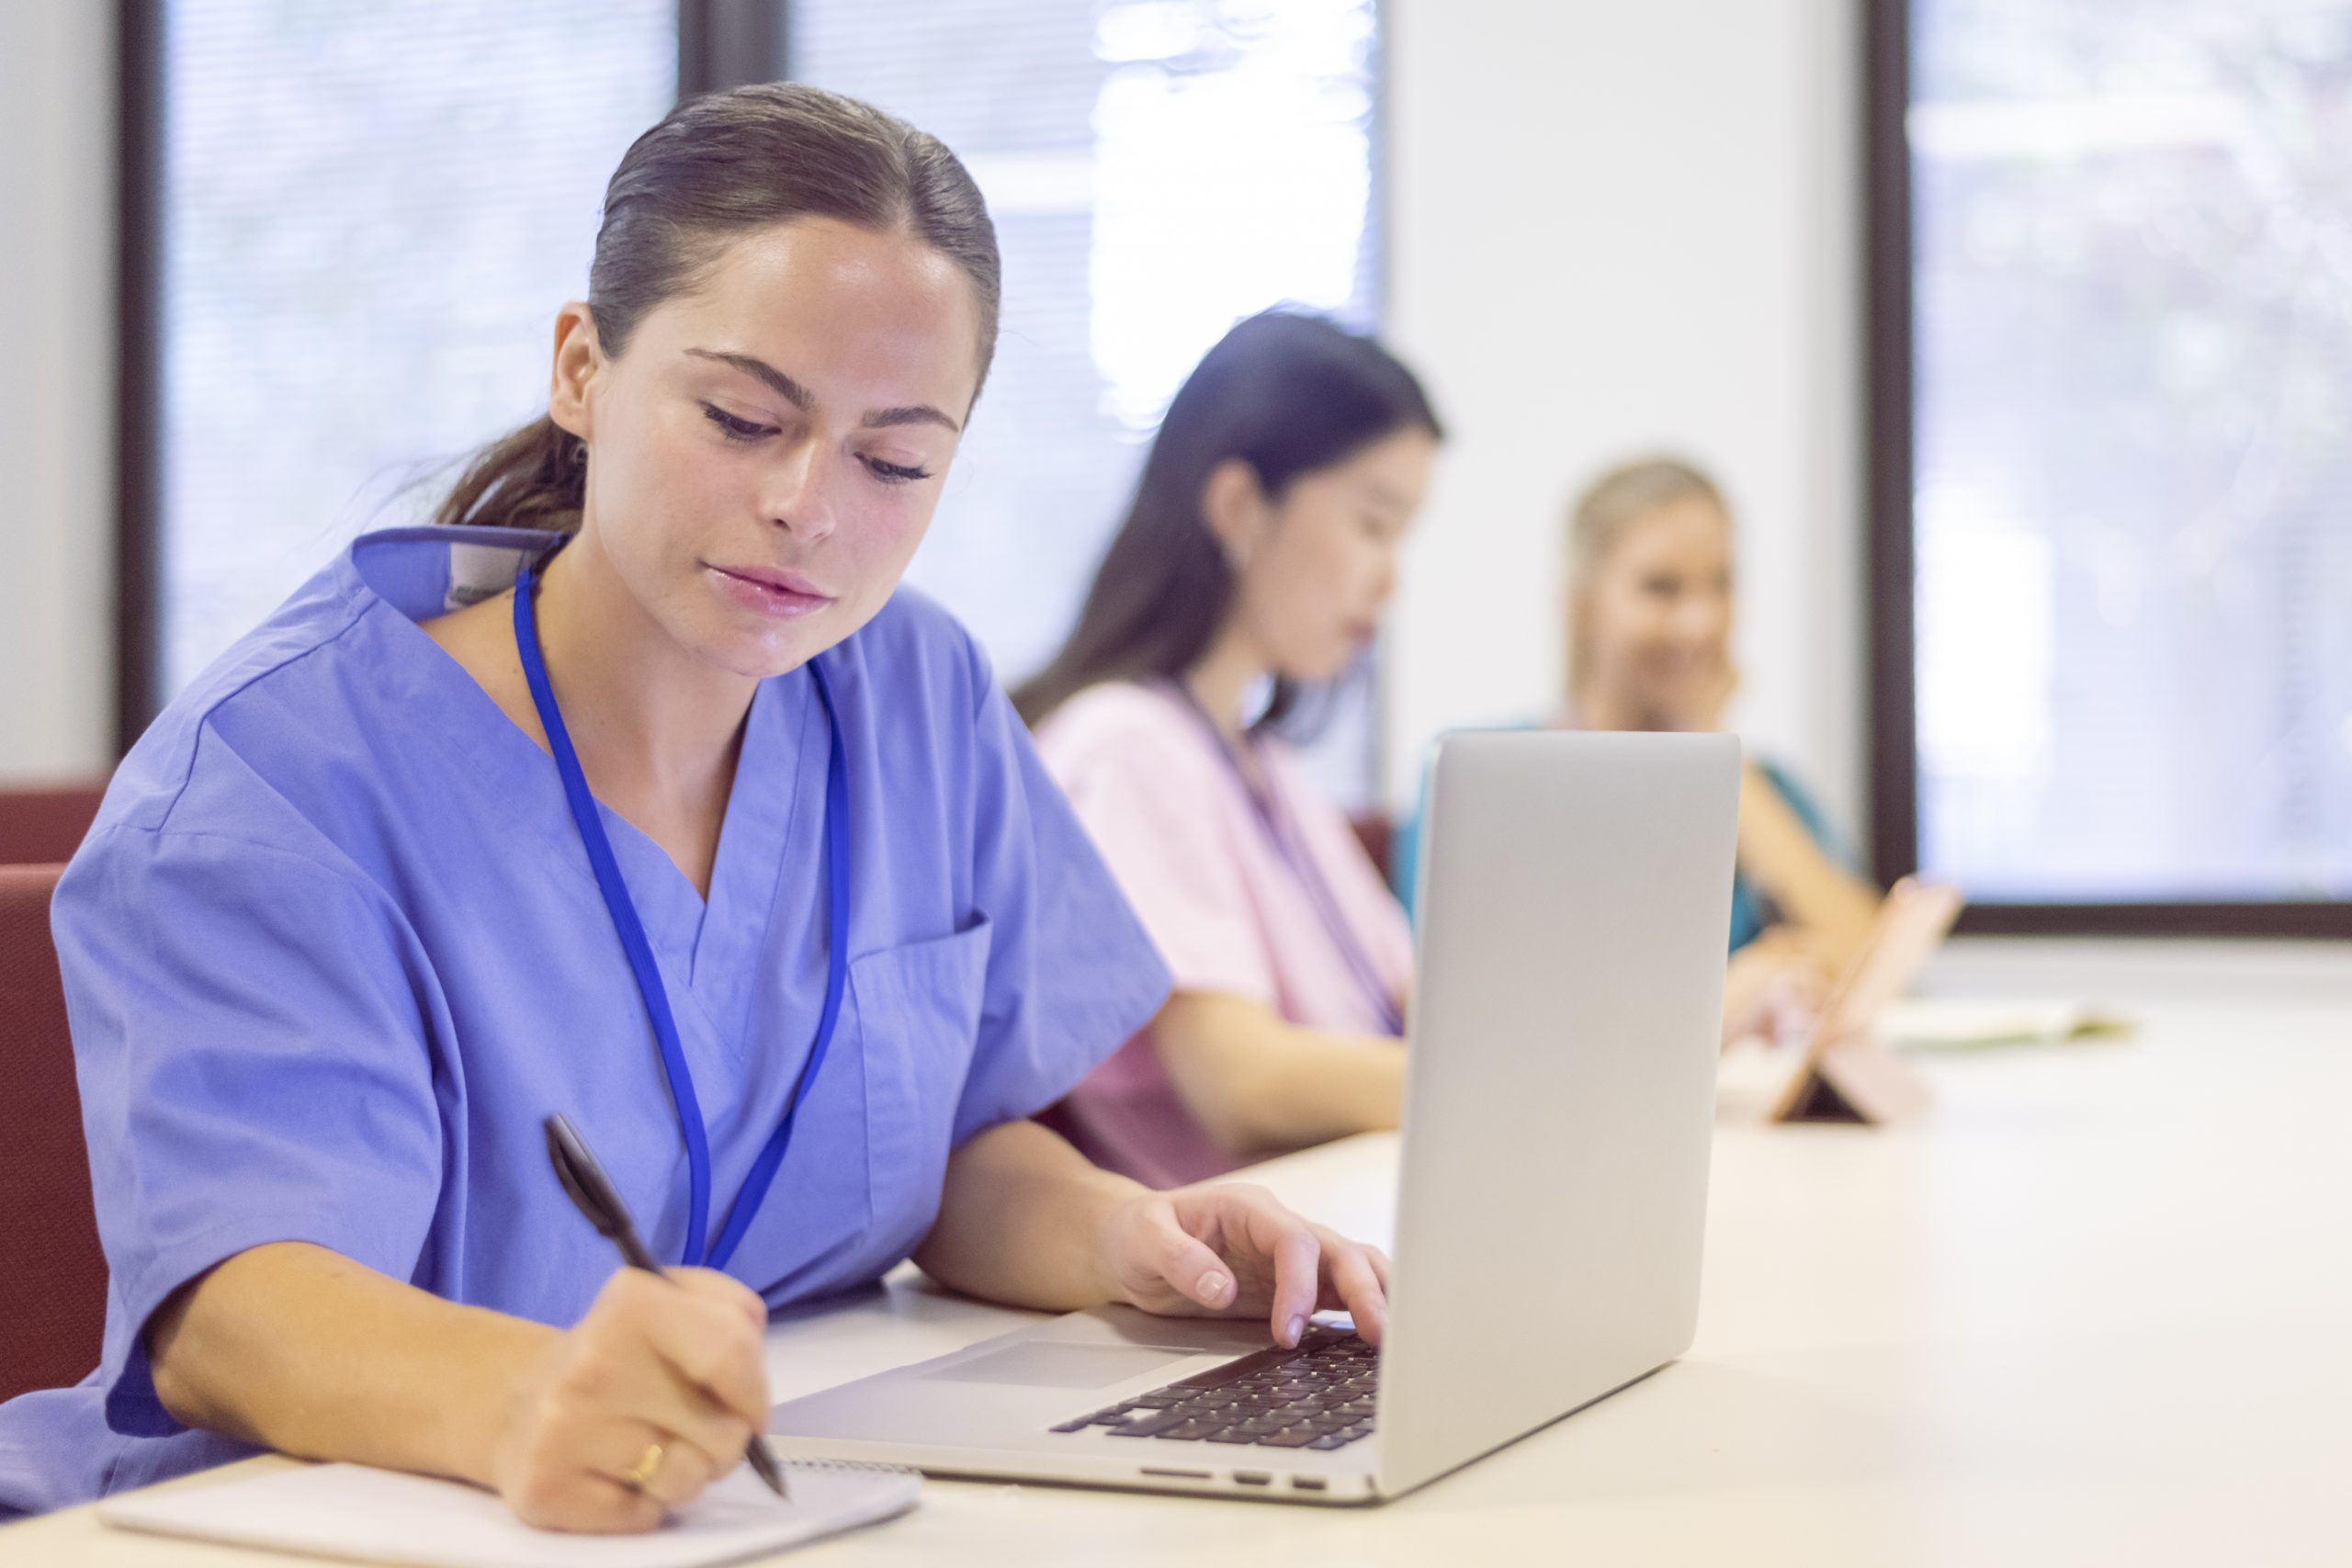 Healthcare professional enjoying online learning